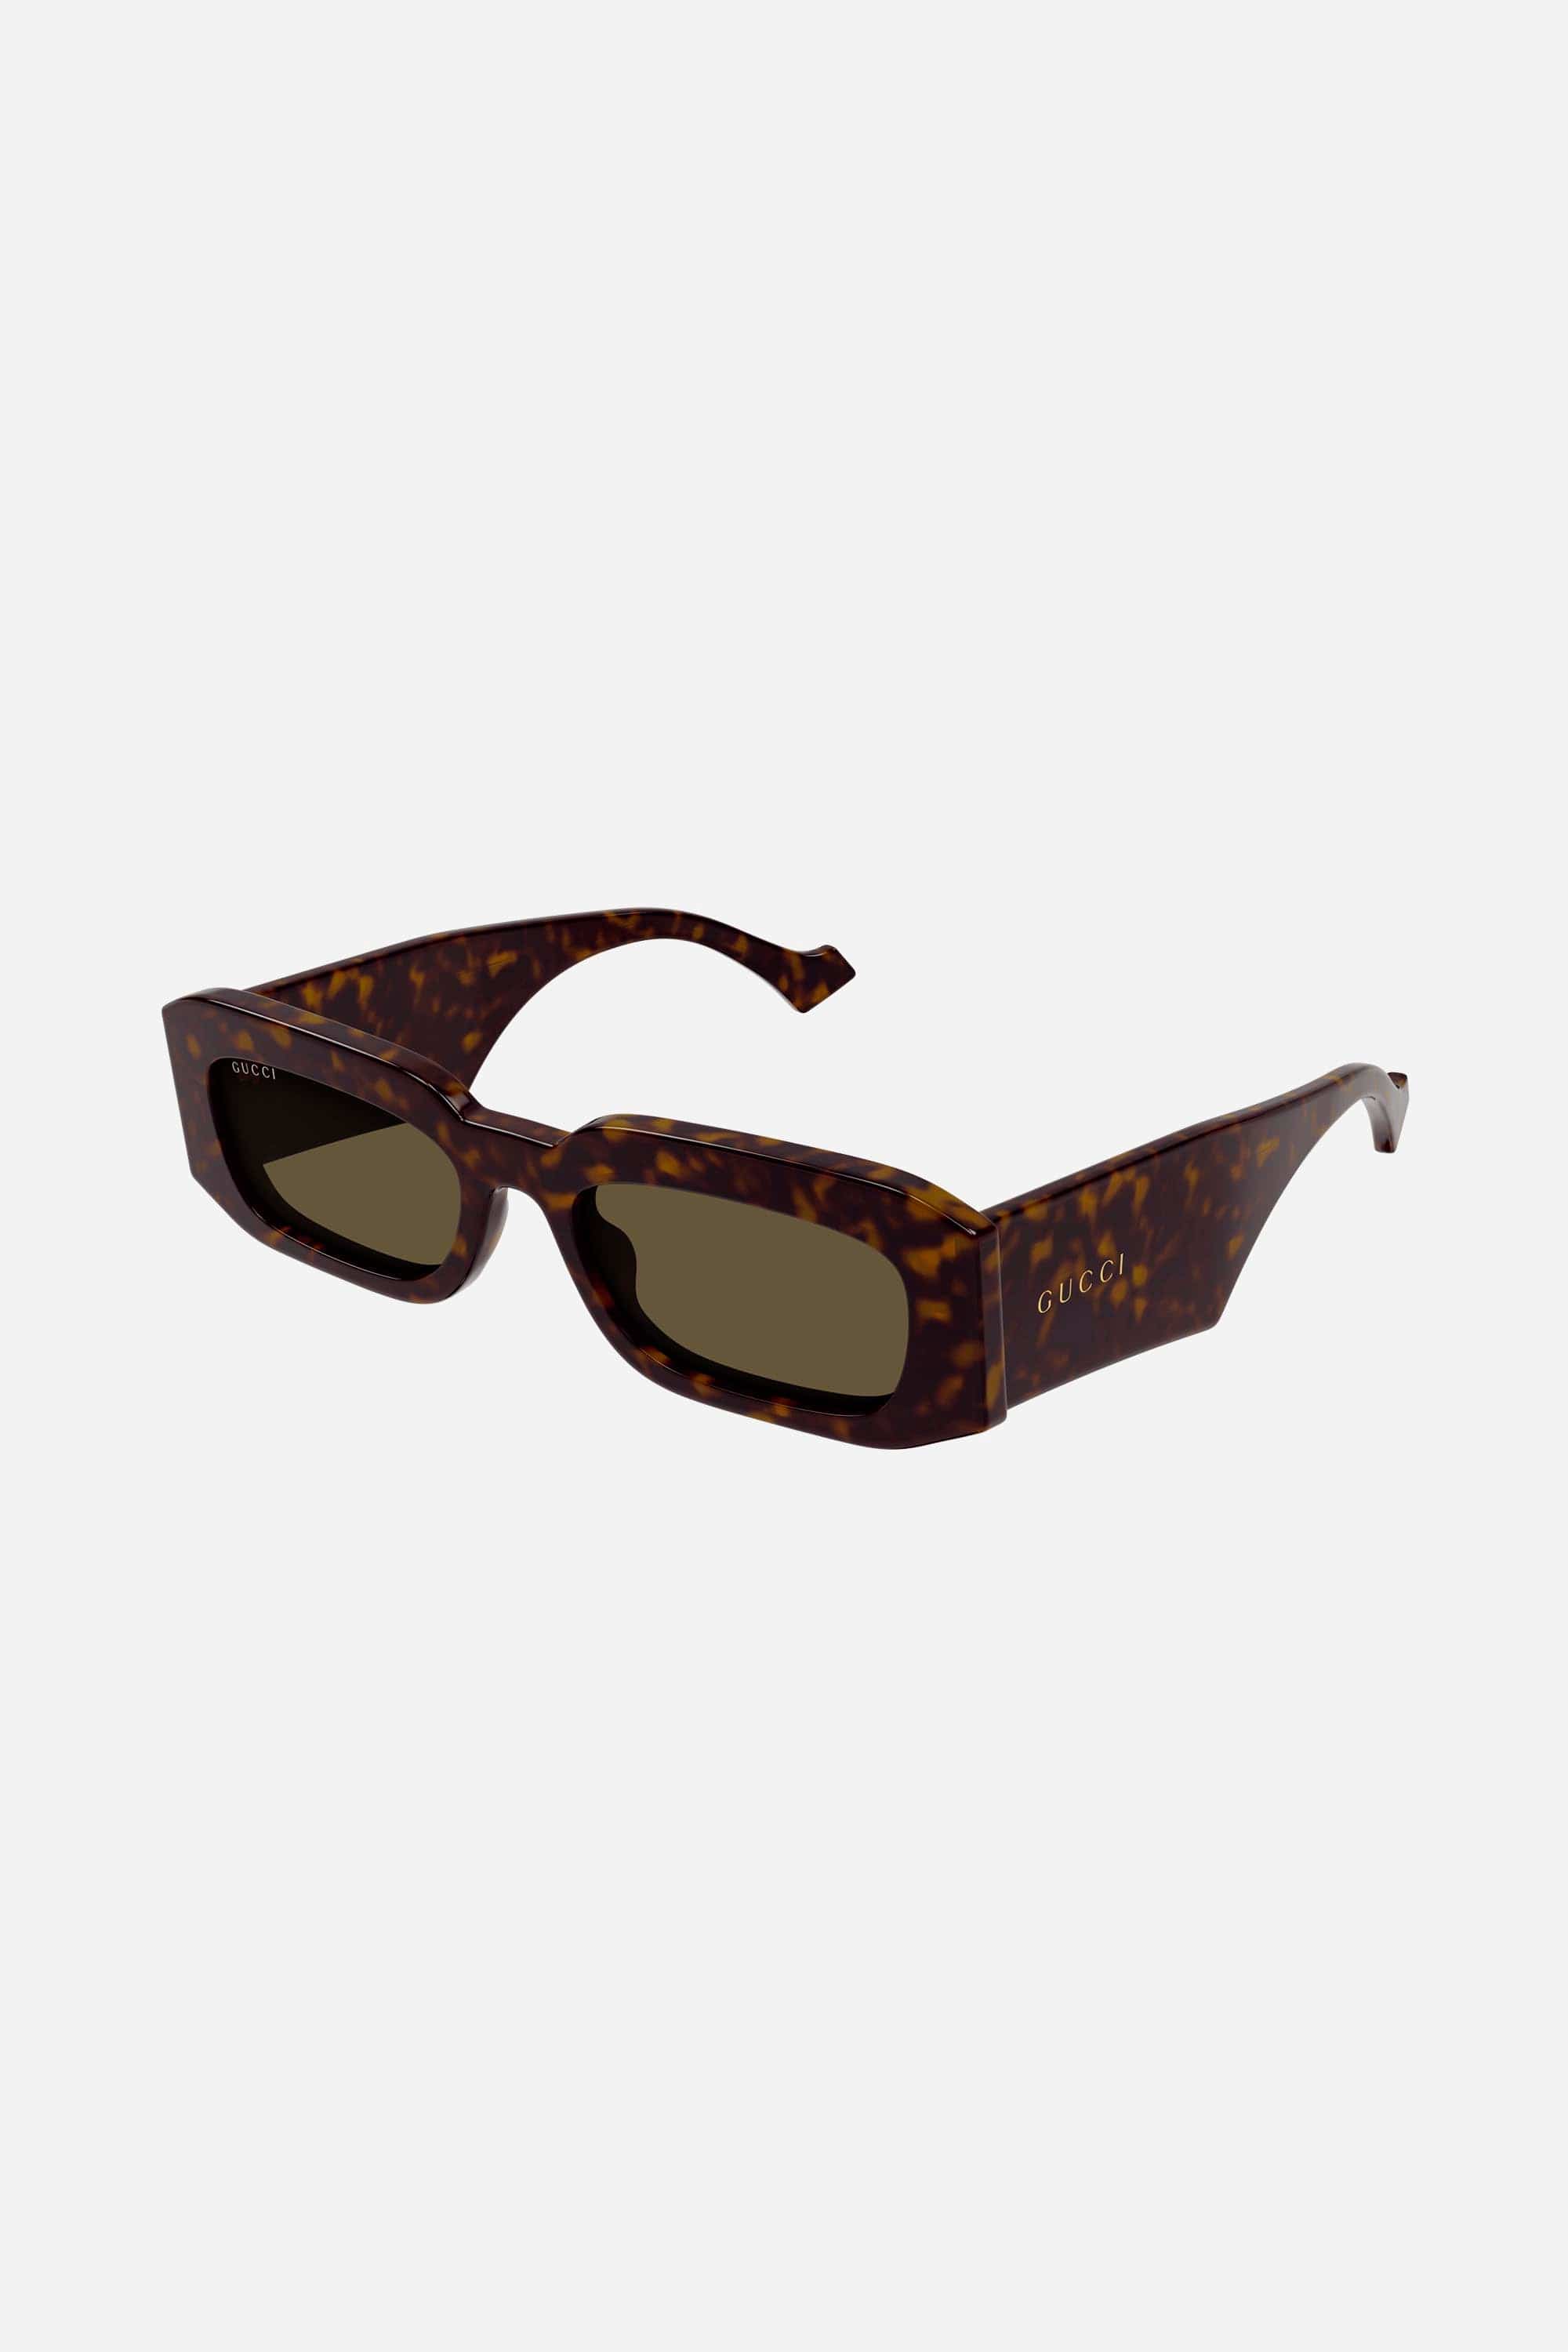 Gucci chuncky havana sunglasses - Eyewear Club